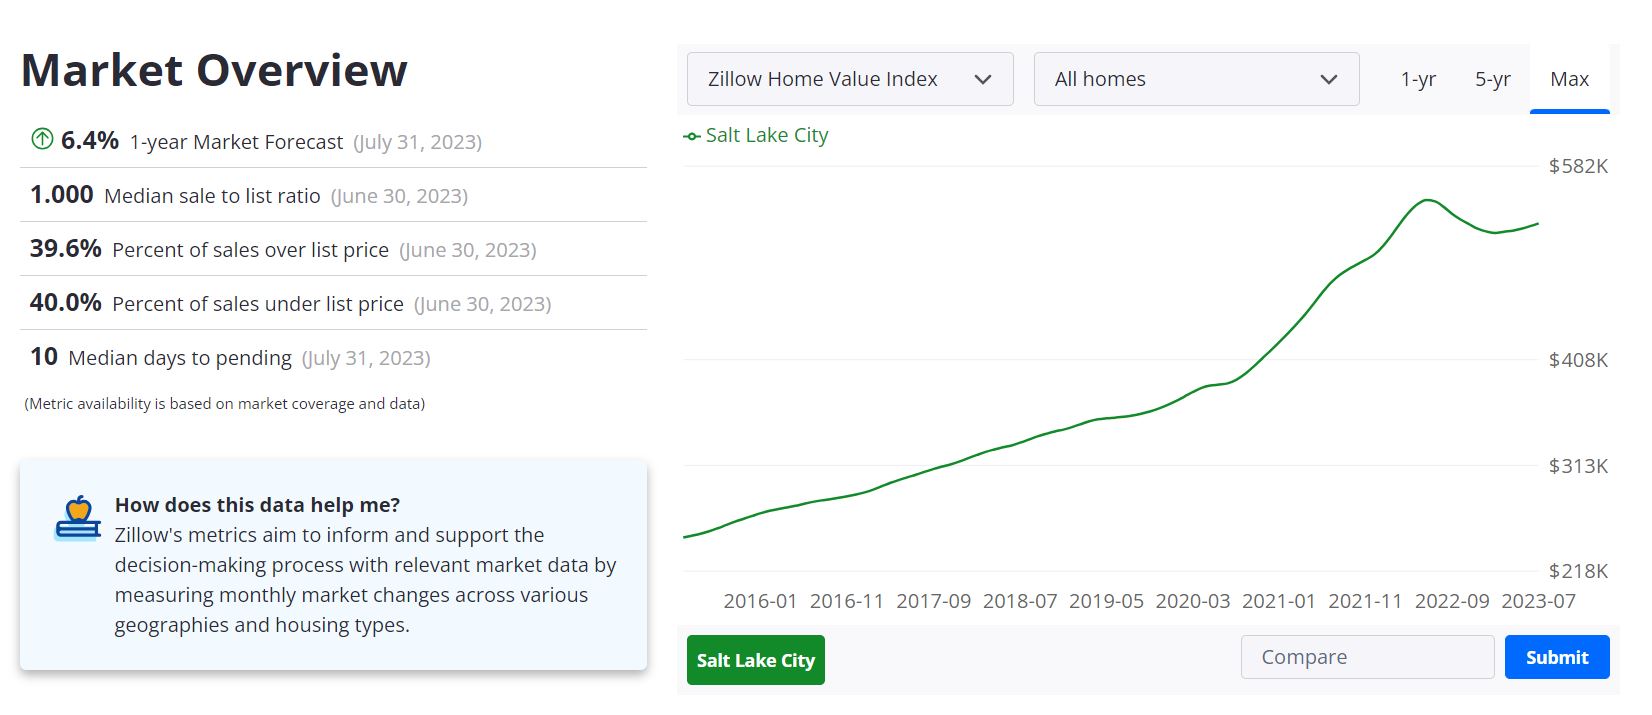 Salt Lake City Housing Market Forecast 2023-2024